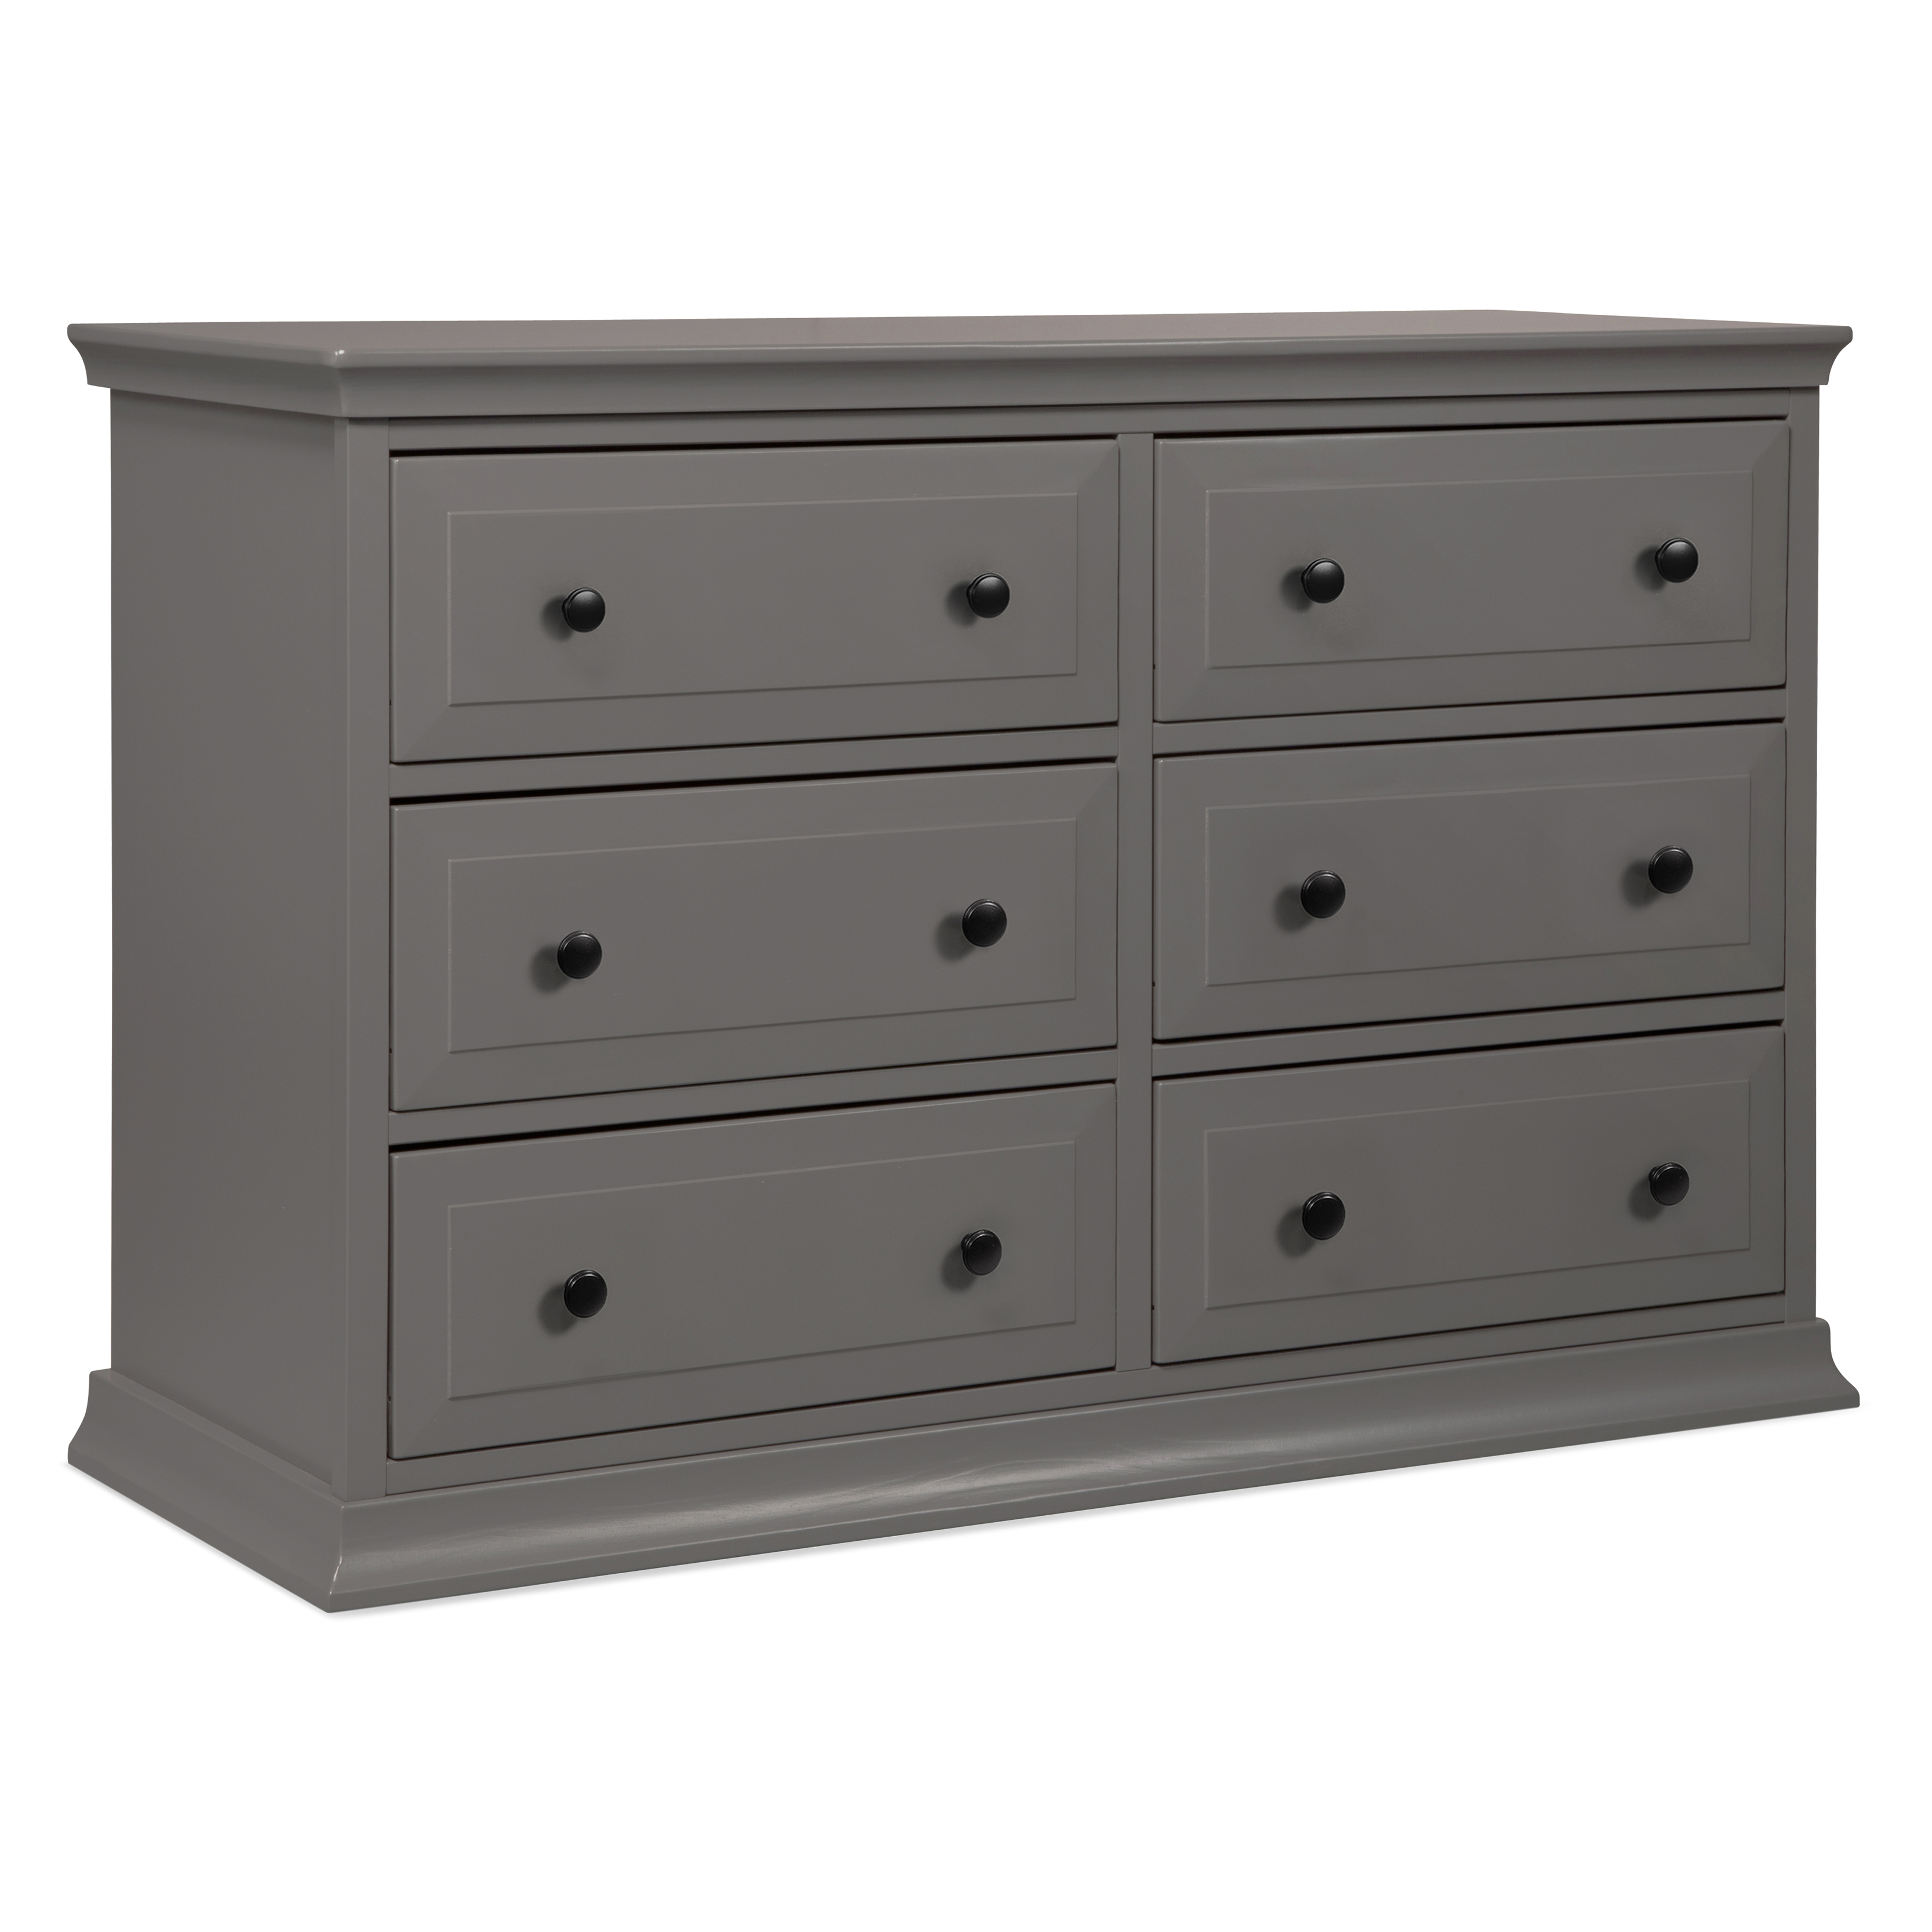 DaVinci Signature 6-Drawer Double Dresser in Slate - image 1 of 5